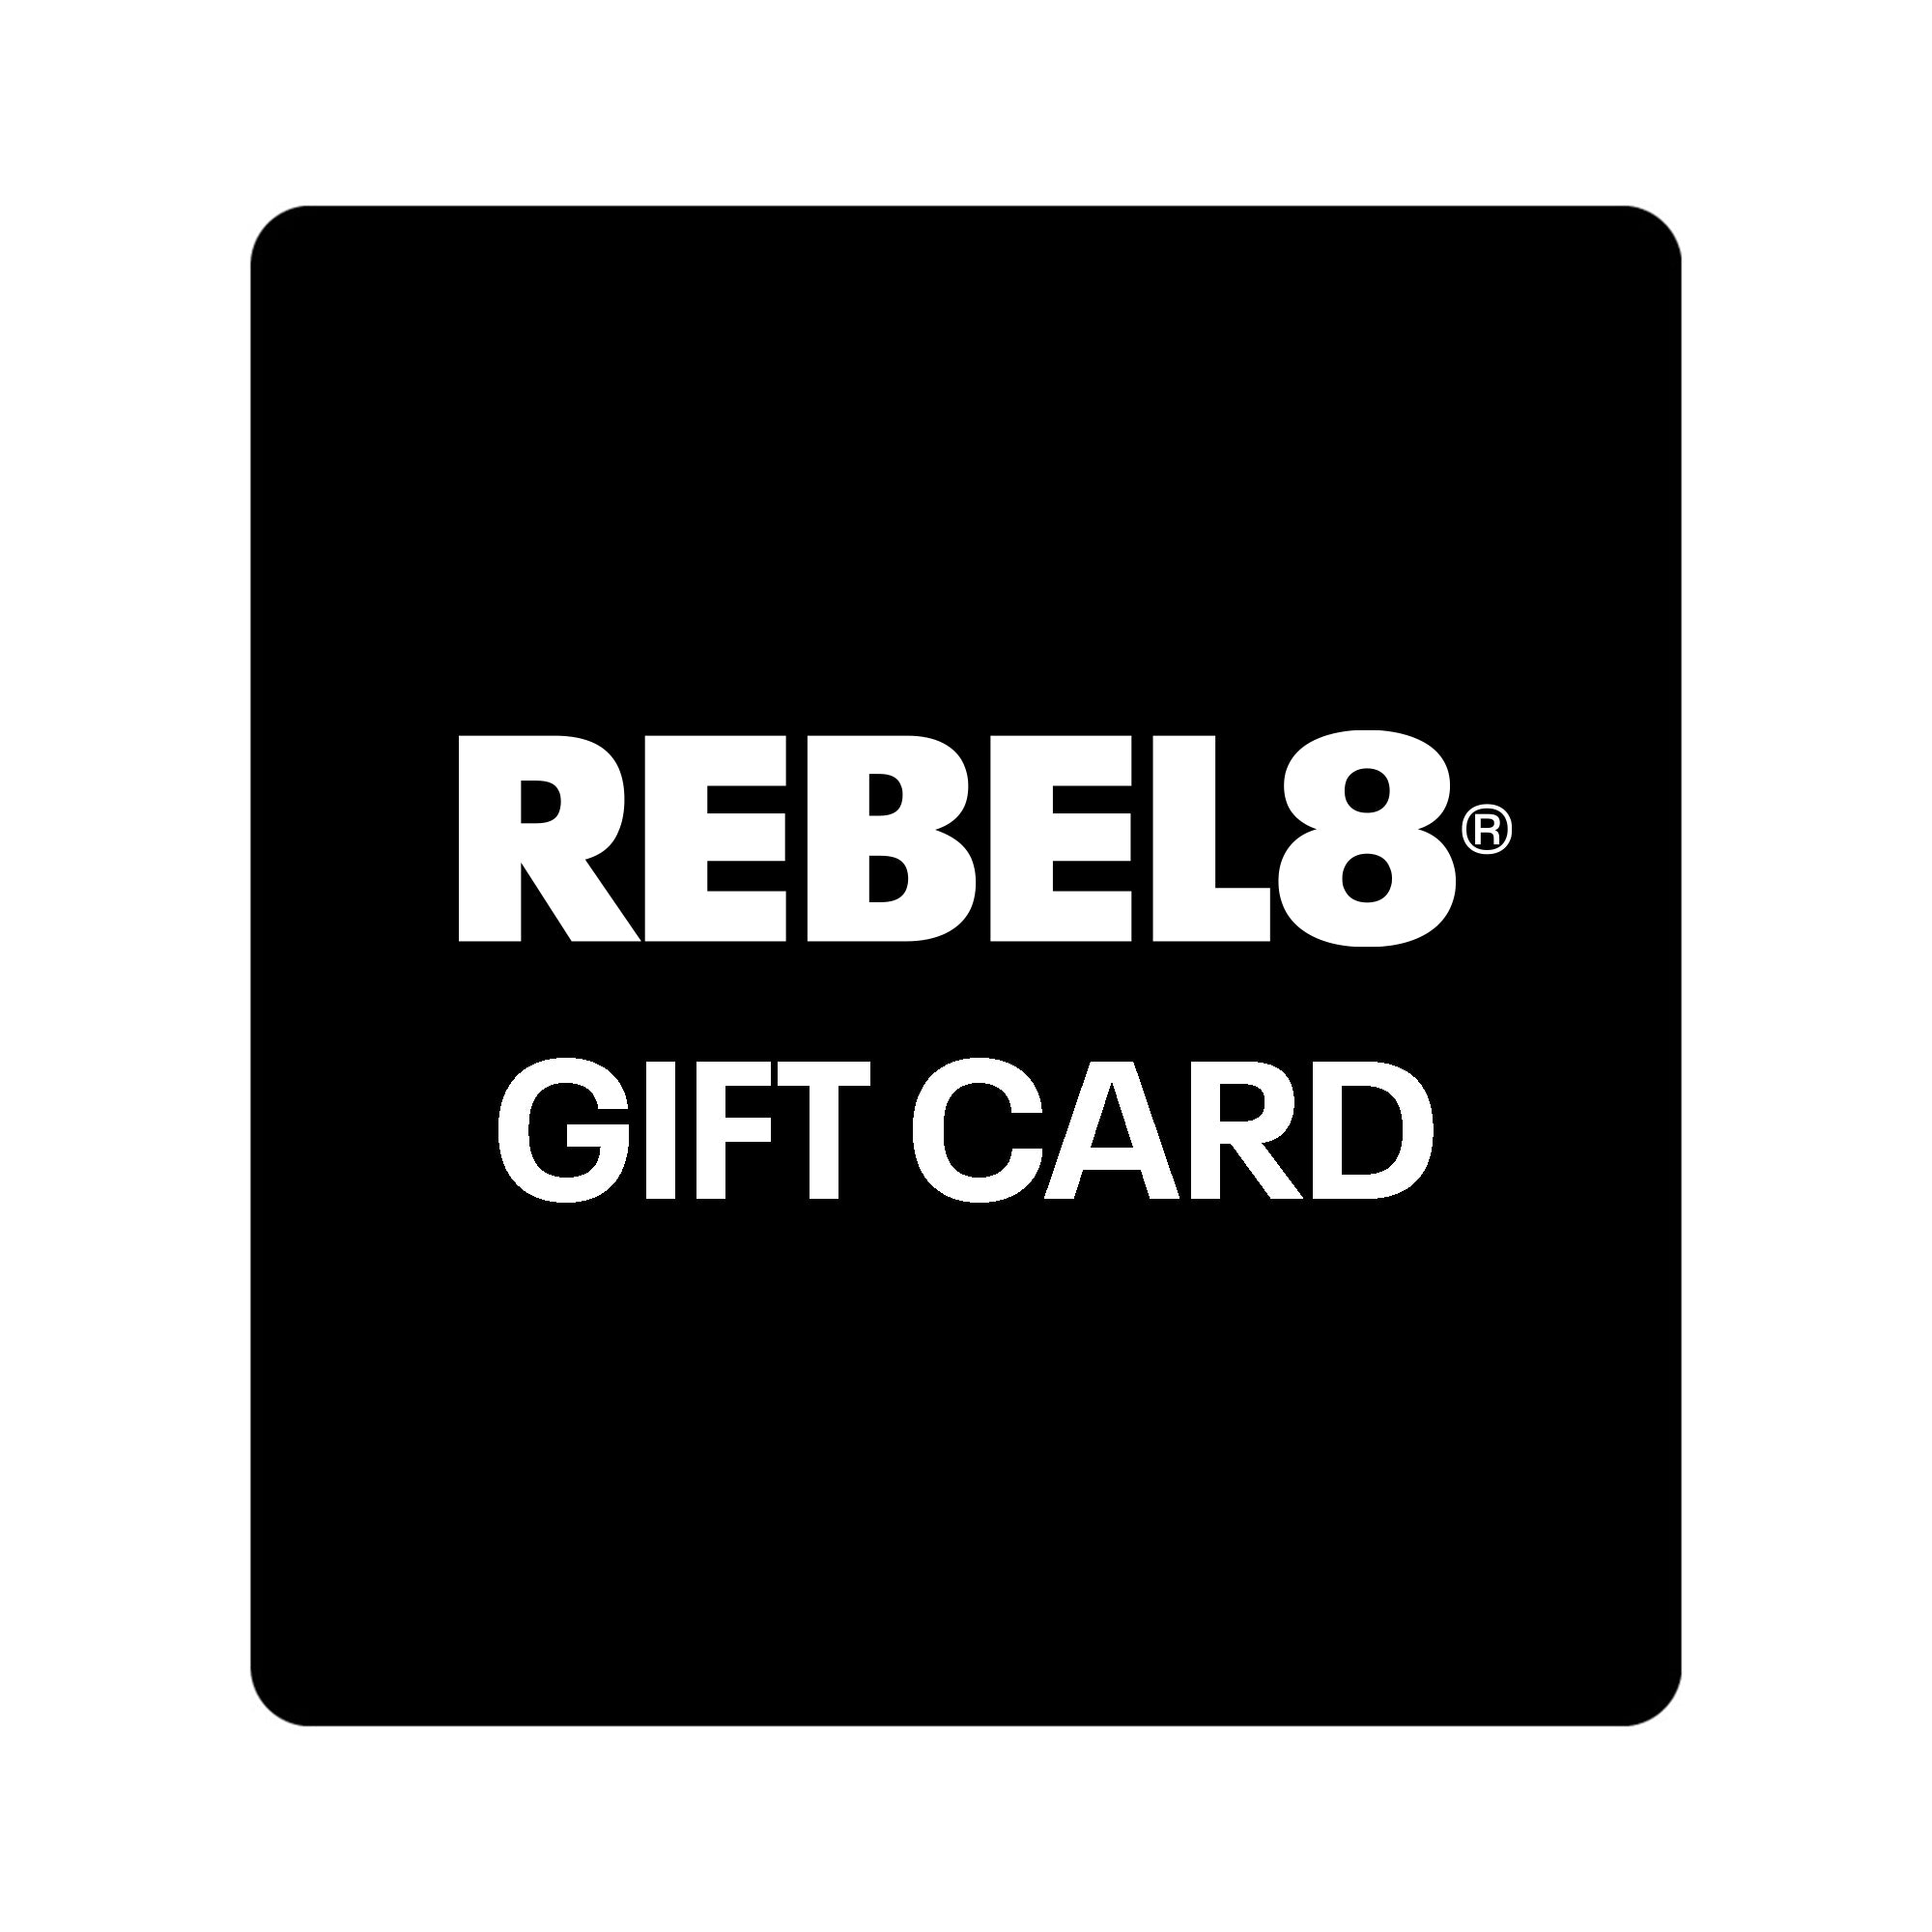 REBEL8 Gift Card